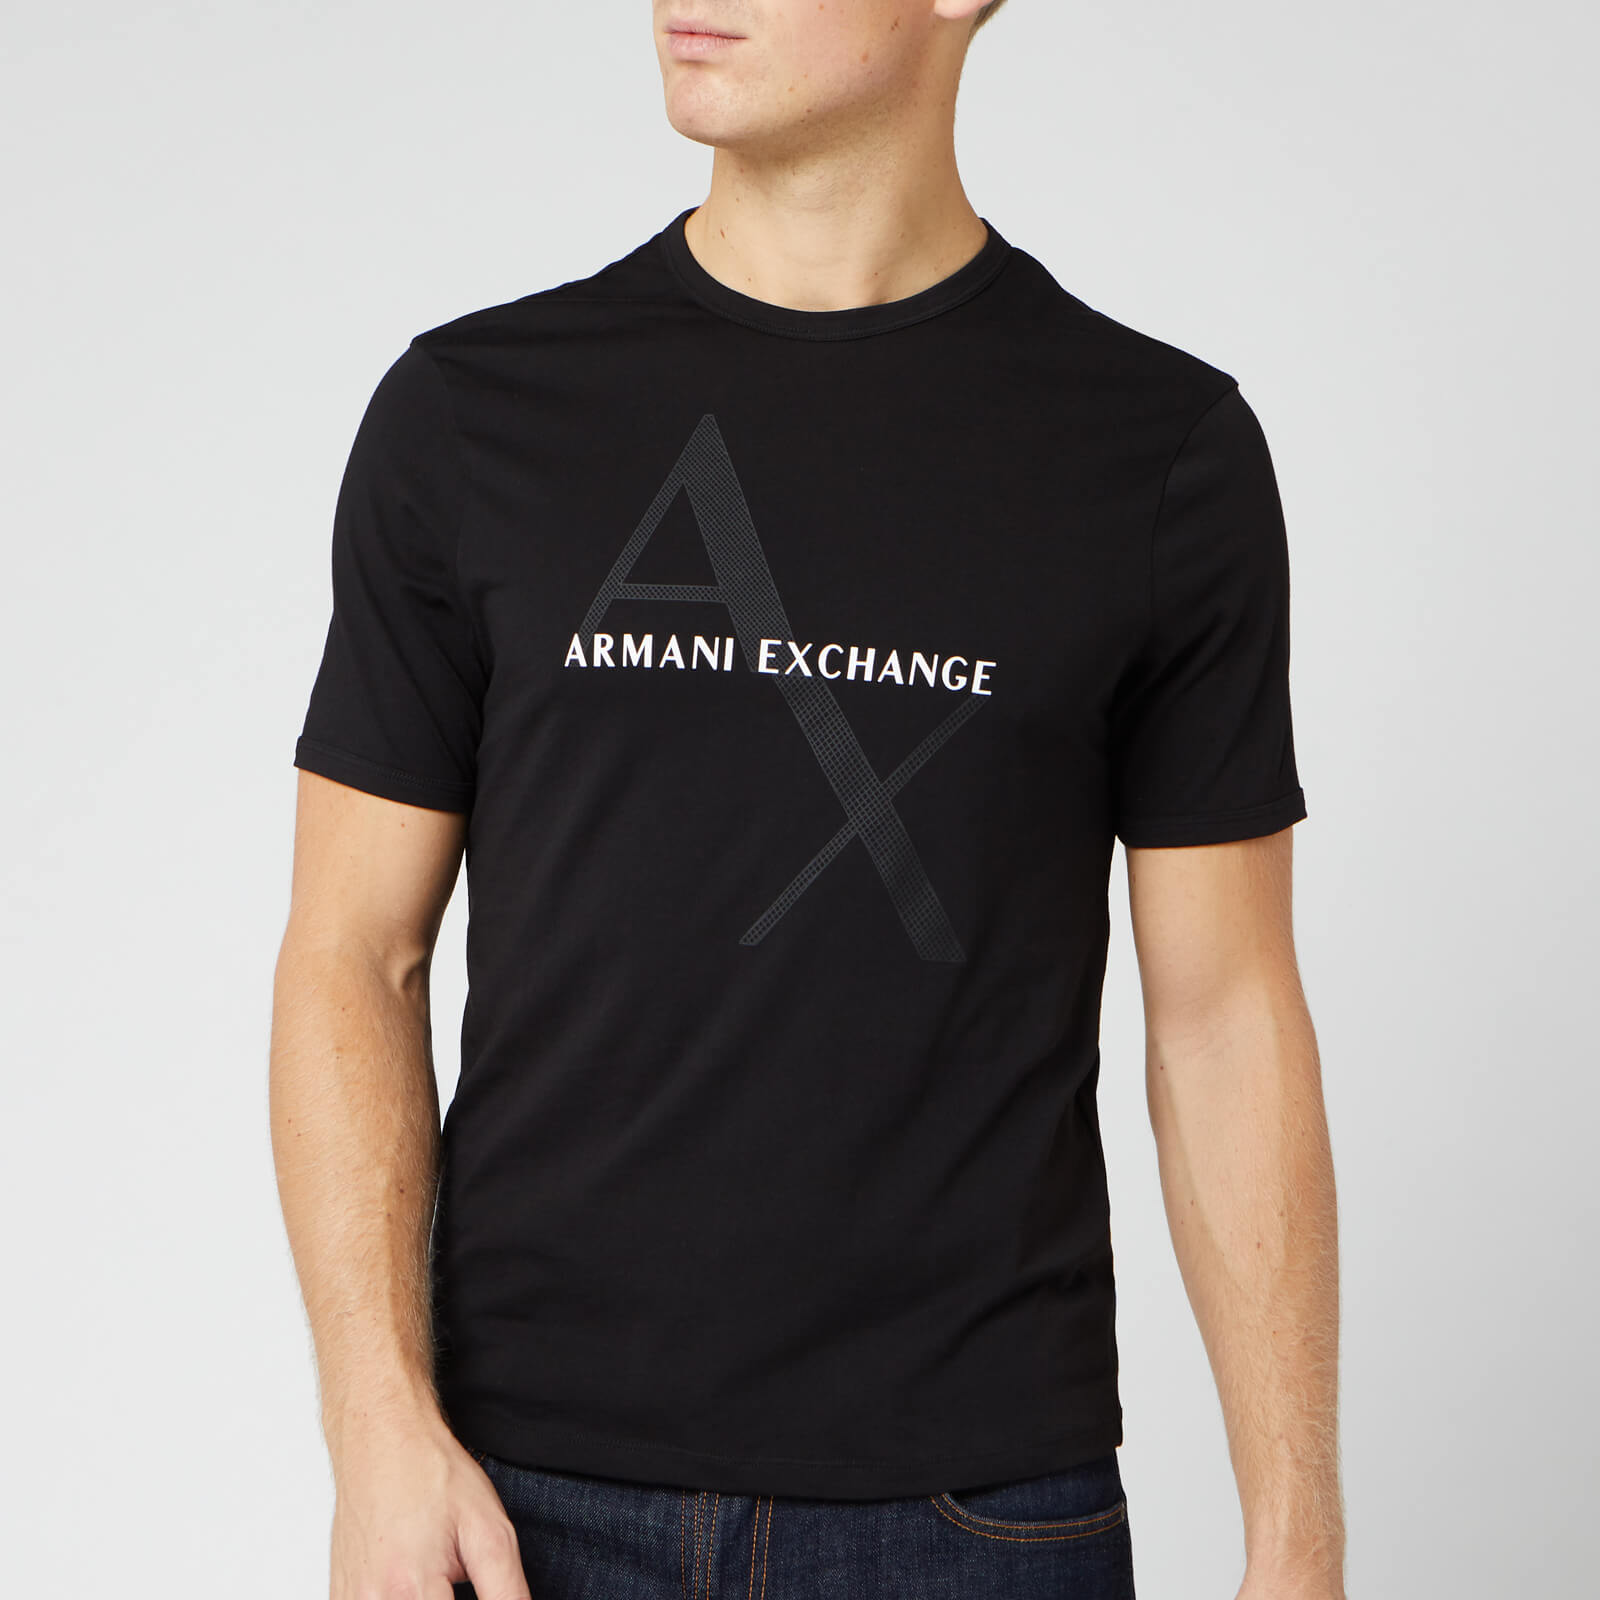 Armani Exchange Logo Shirt Flash Sales, 55% OFF | www 